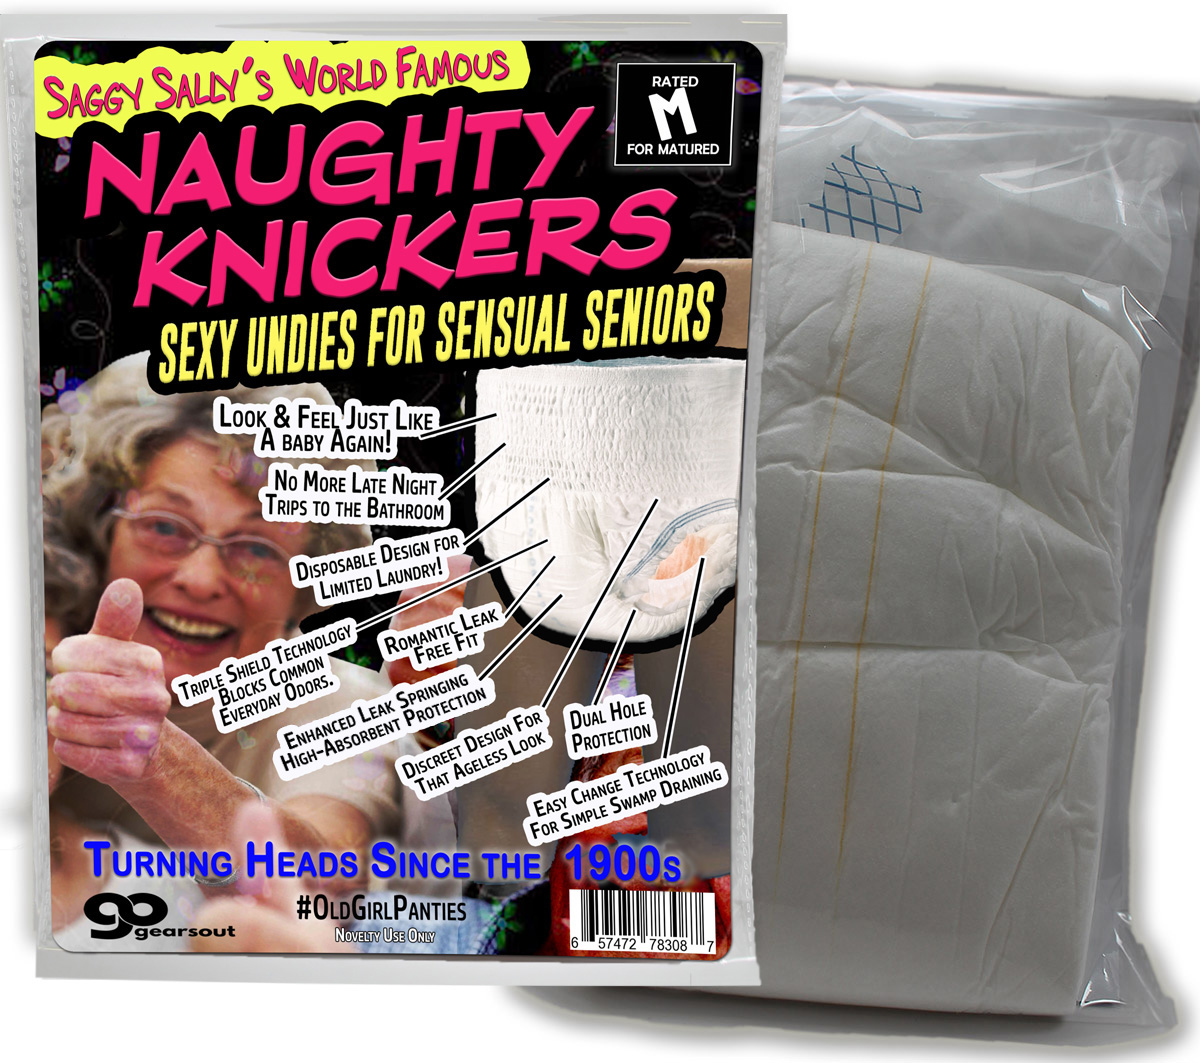 Naughty Knickers for Sensual Seniors - $8.95 